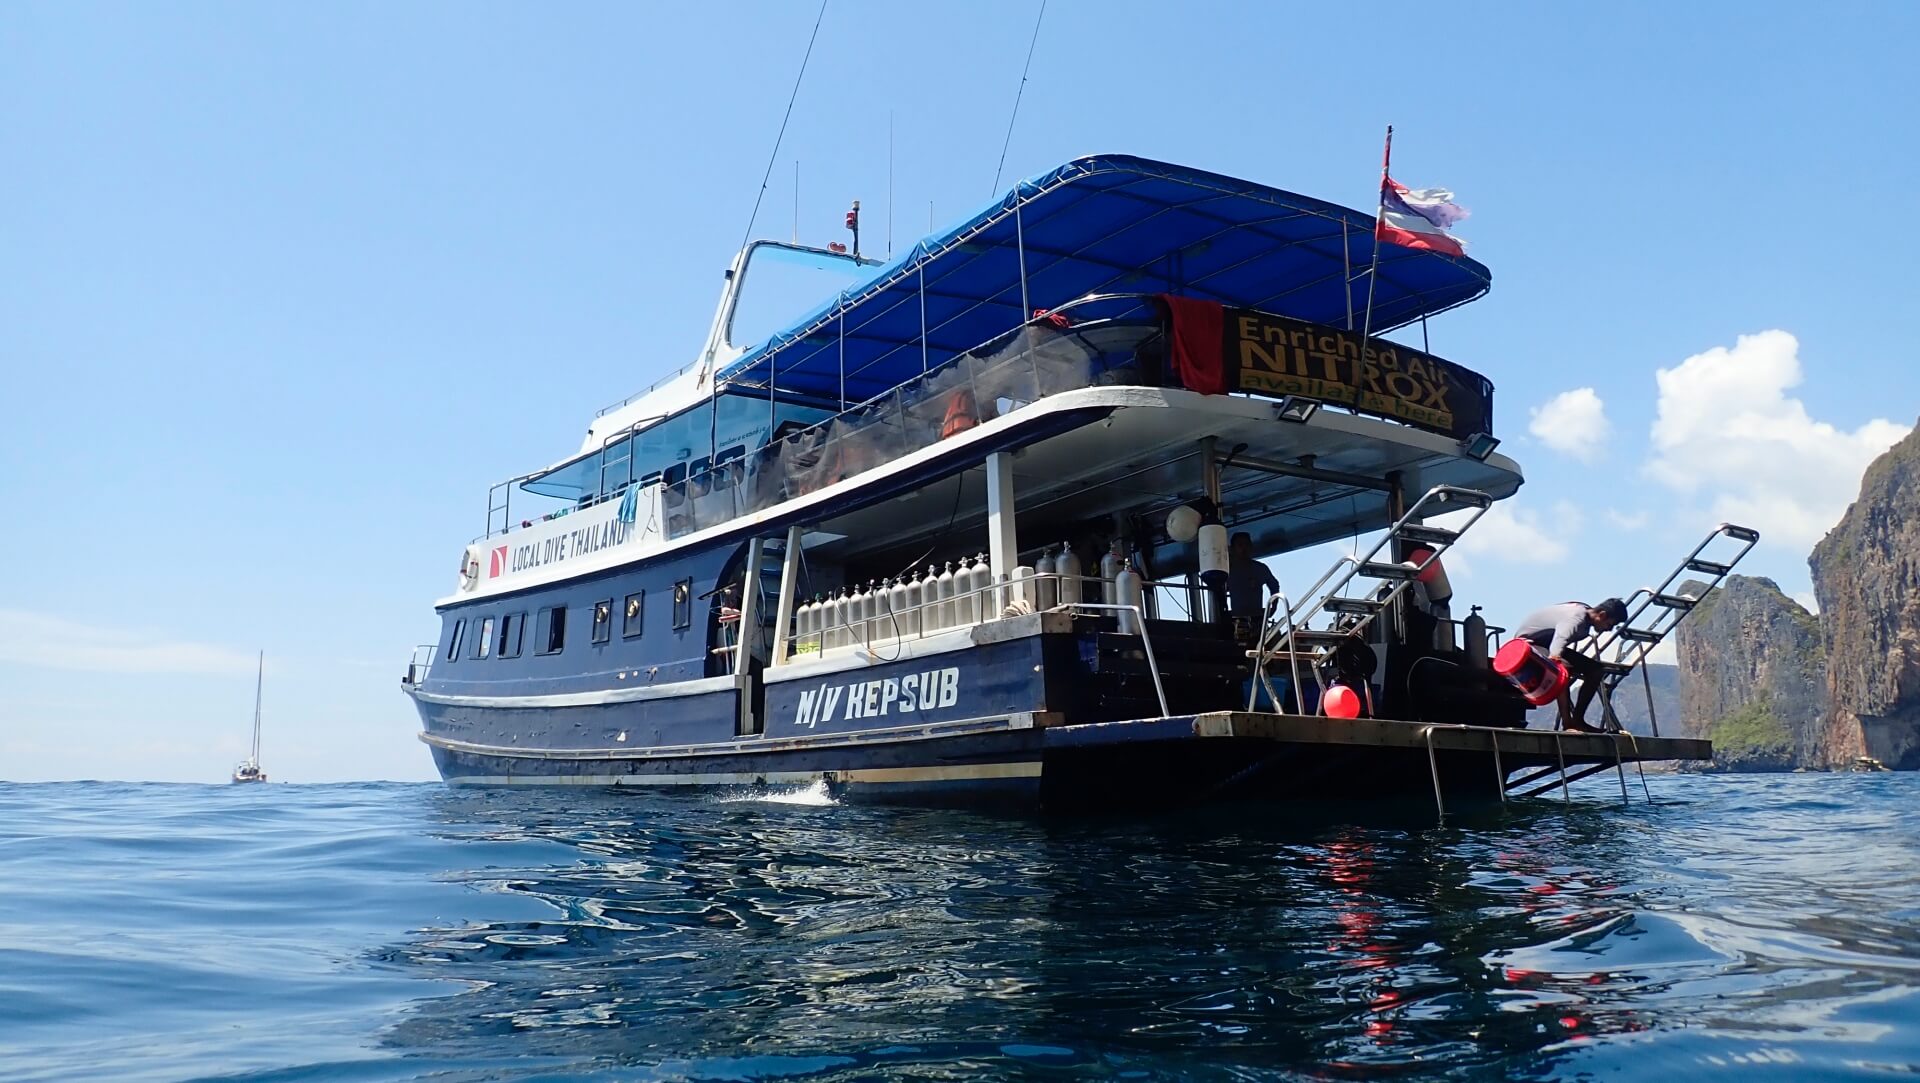 M/V Kepsub - Phuket Diving Tours · Local Dive Thailand